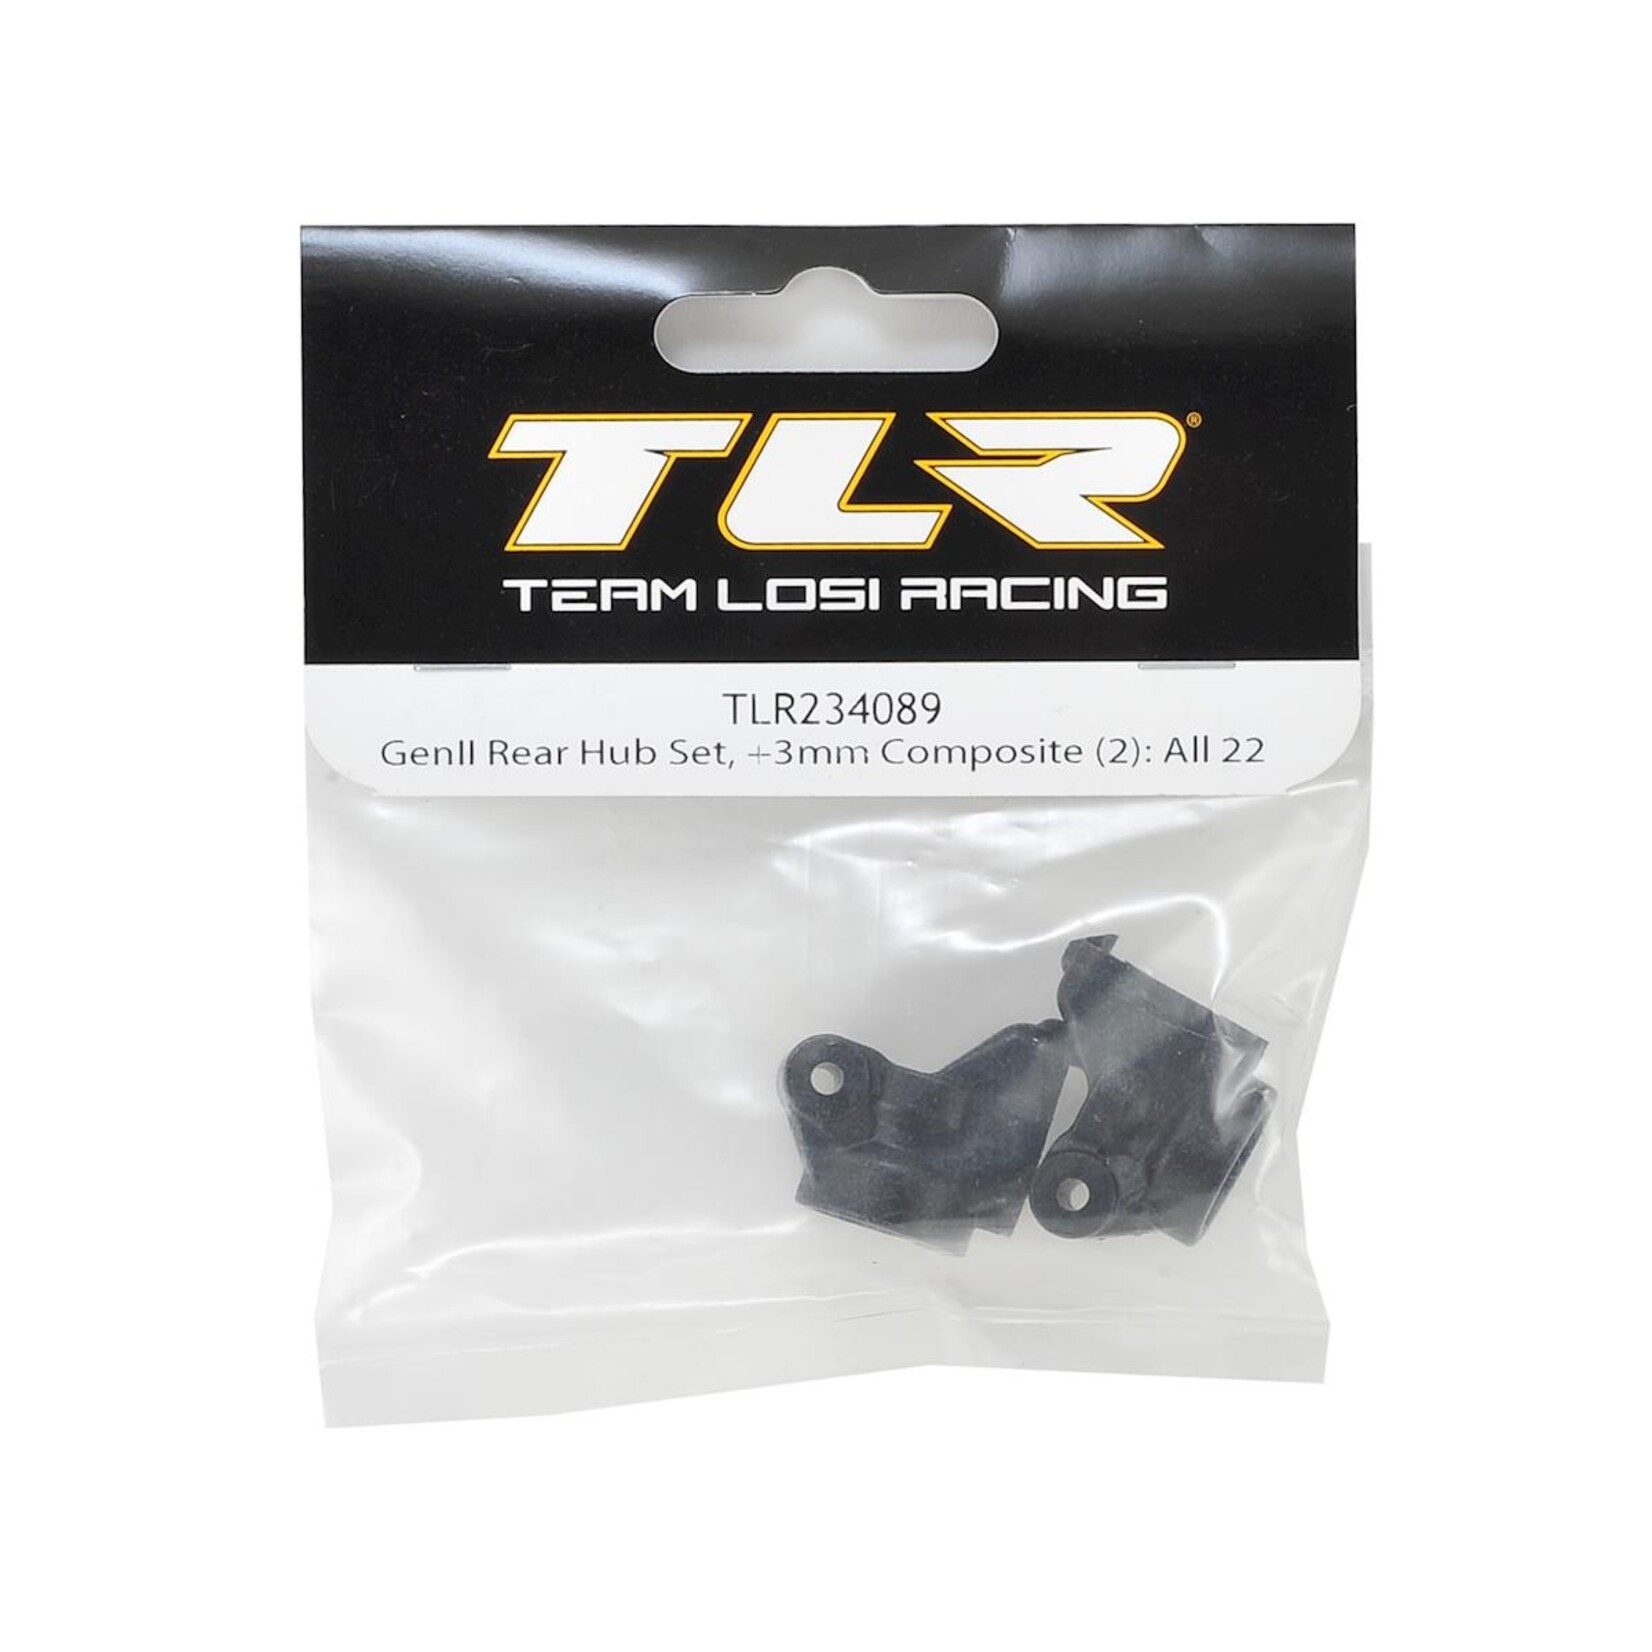 TLR Team Losi Racing Gen II Composite Rear Hub Body (2) (TLR 22) #TLR234089